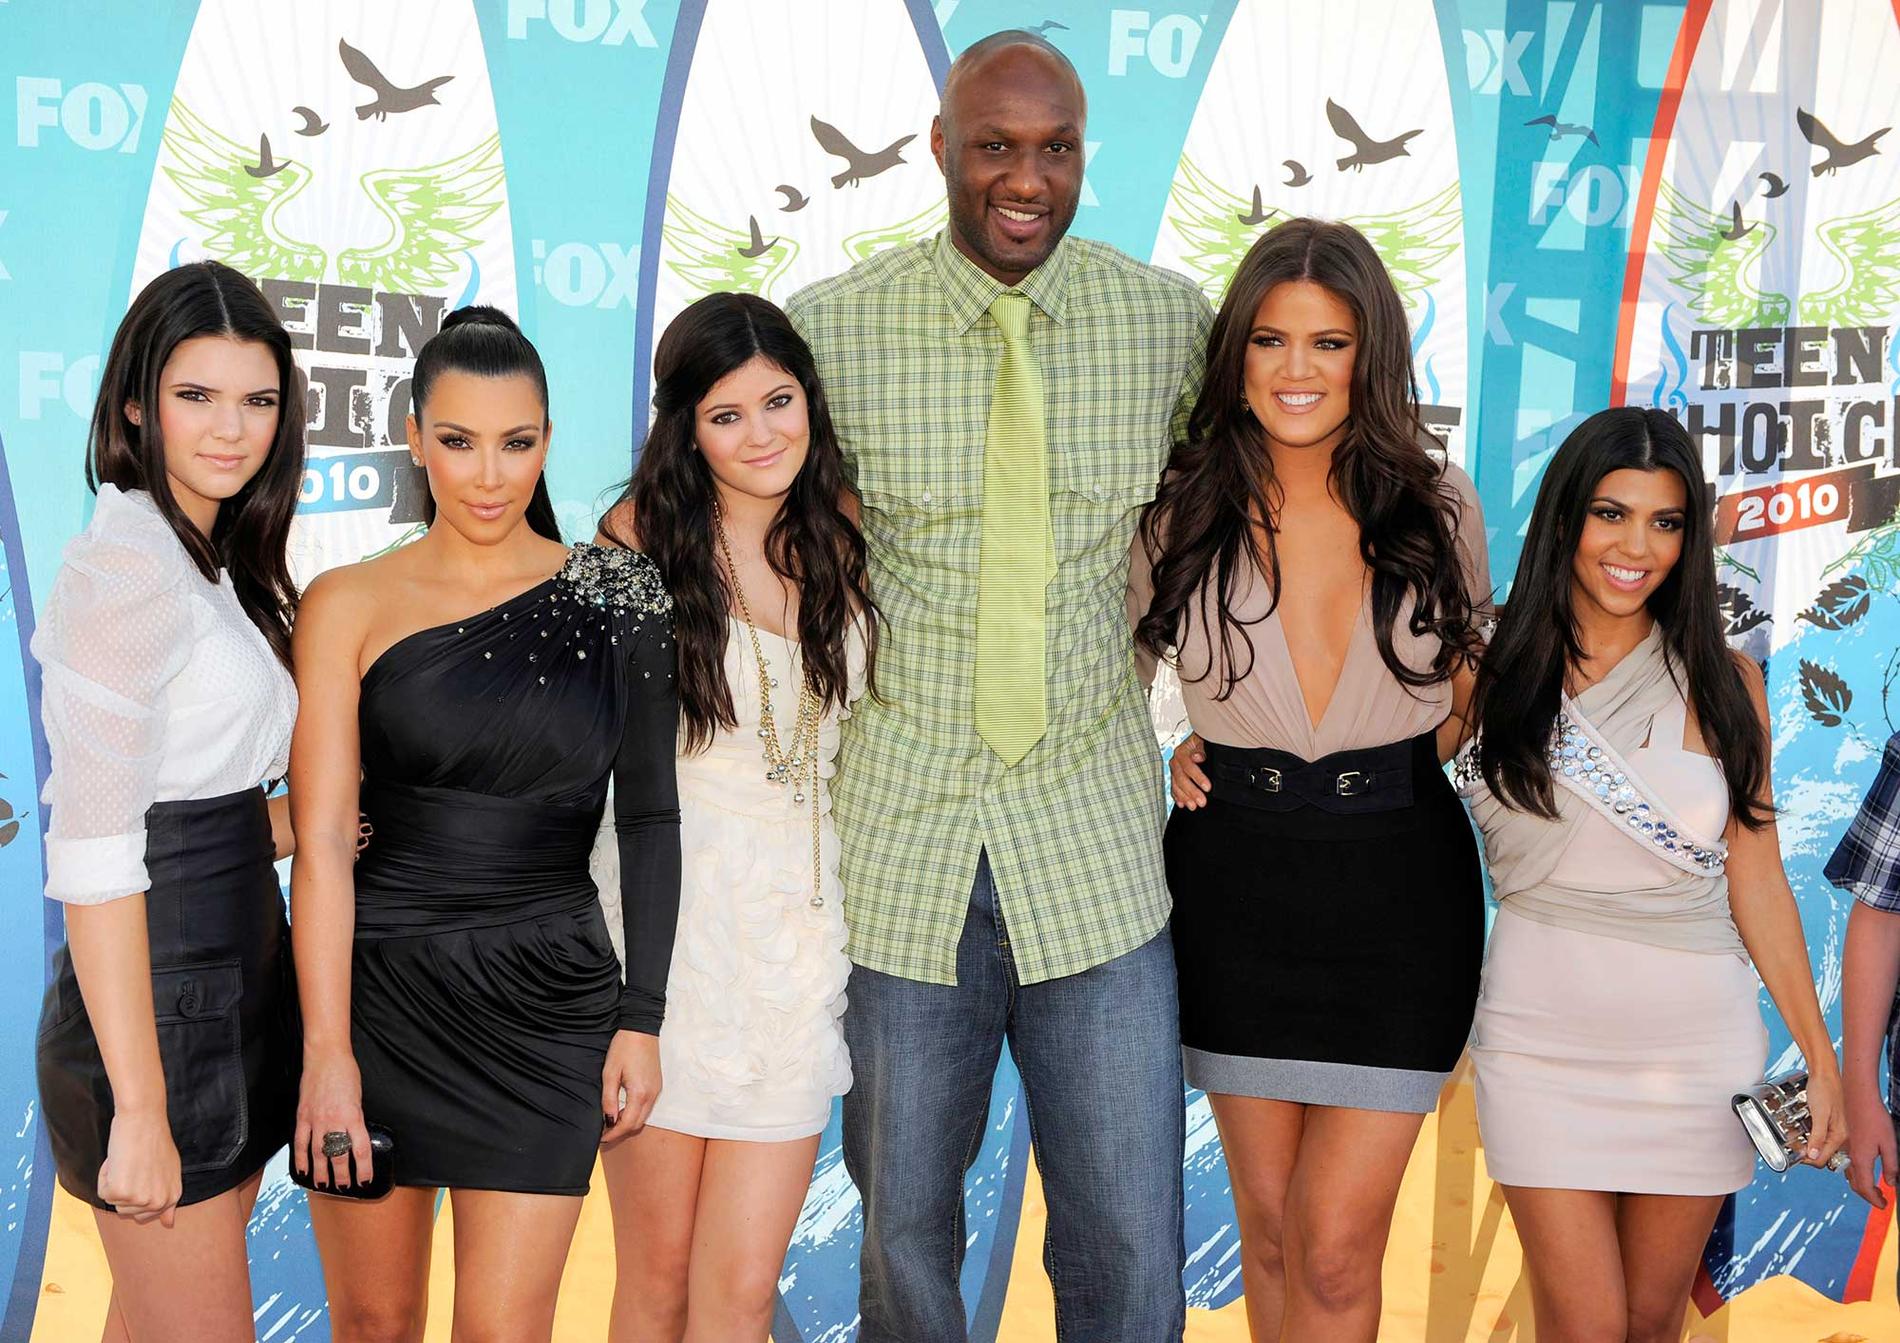 Lamar Odom omgiven av (från vänster) Kendall Jenner, Kim Kardashian, Kylie Jenner, Khloé Kardashian och Kourtney Kardashian. Fotot togs 2010.